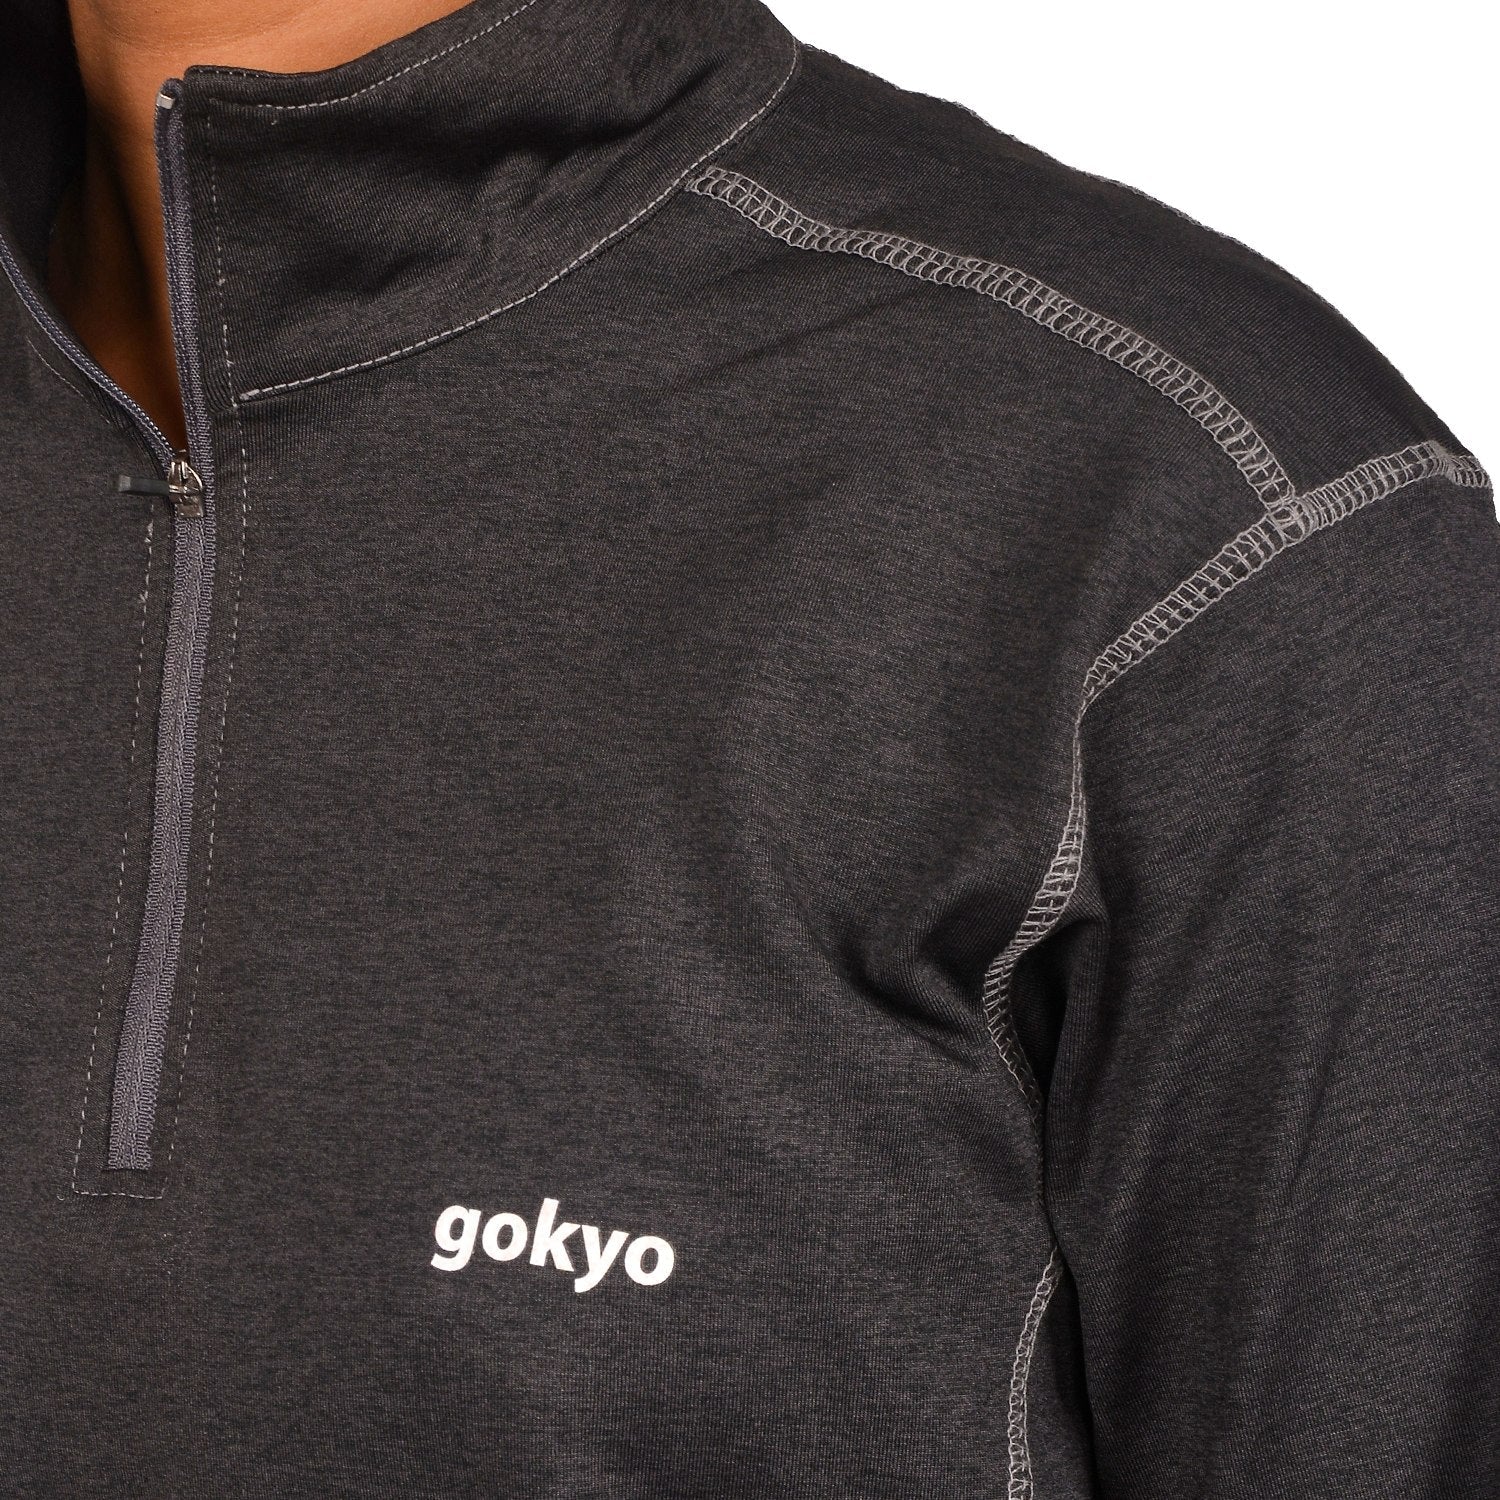 Buy Gokyo K2 Melange Trekking Tshirt - Women | Trekking & Hiking T-shirts at Gokyo Outdoor Clothing & Gear